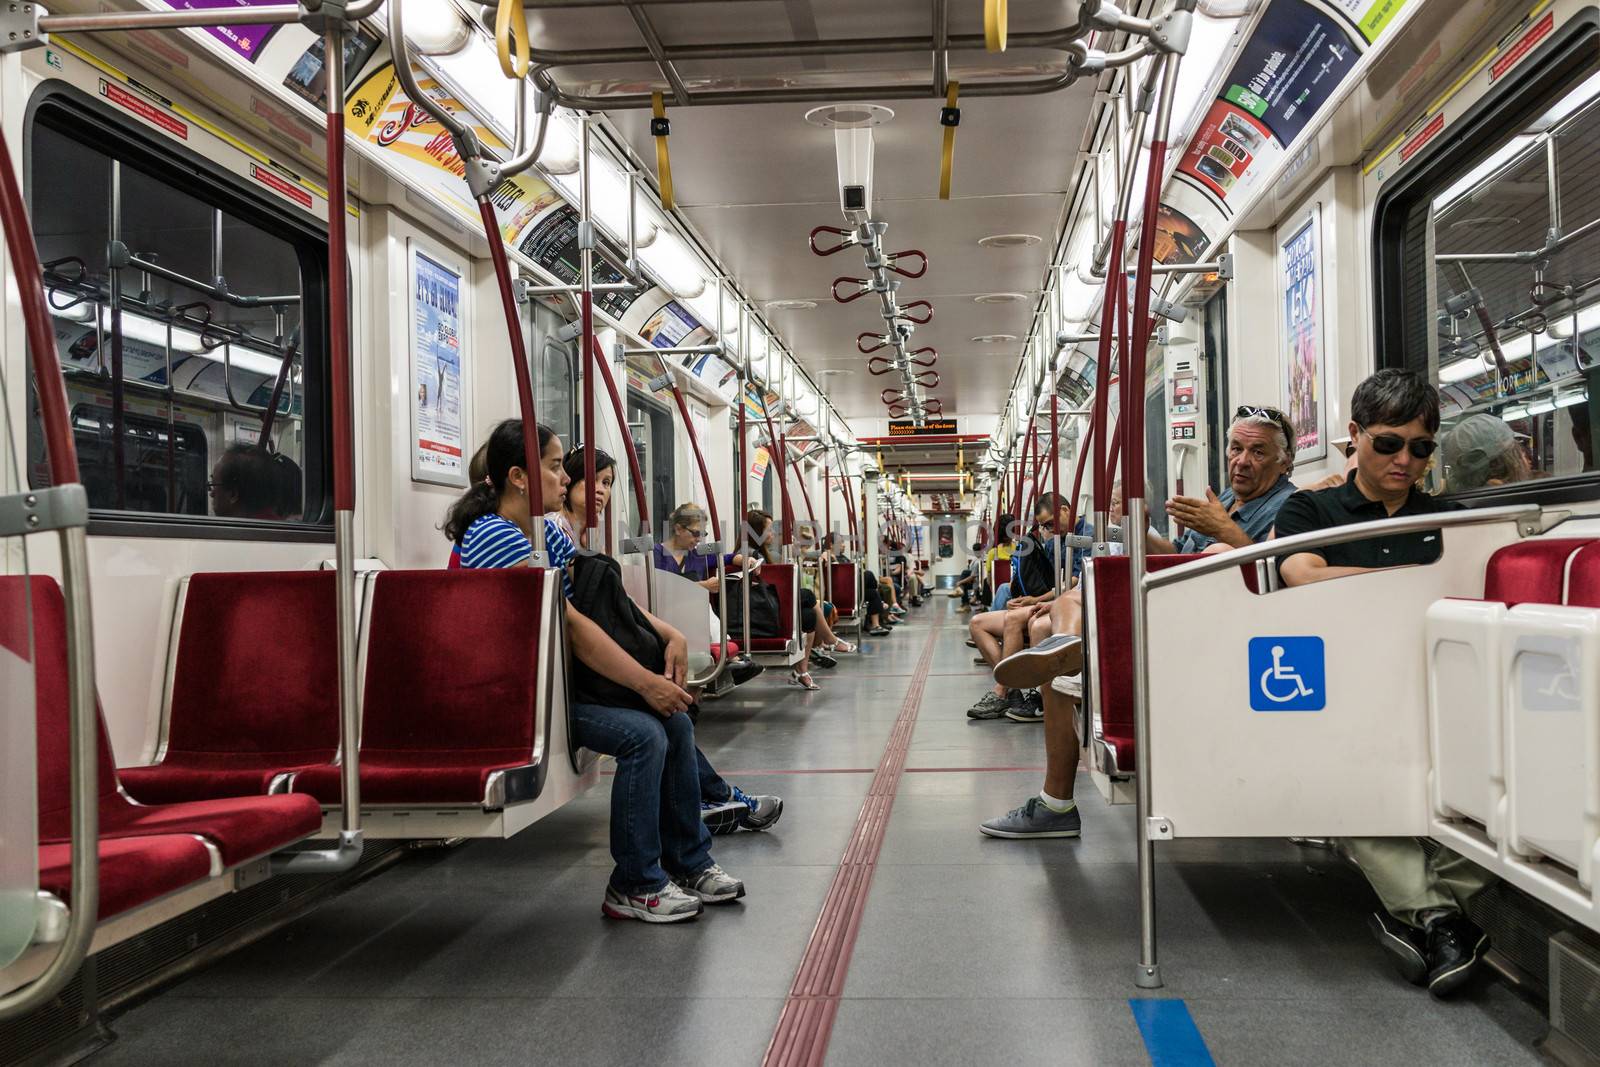 Interior of Toronto subway by IVYPHOTOS